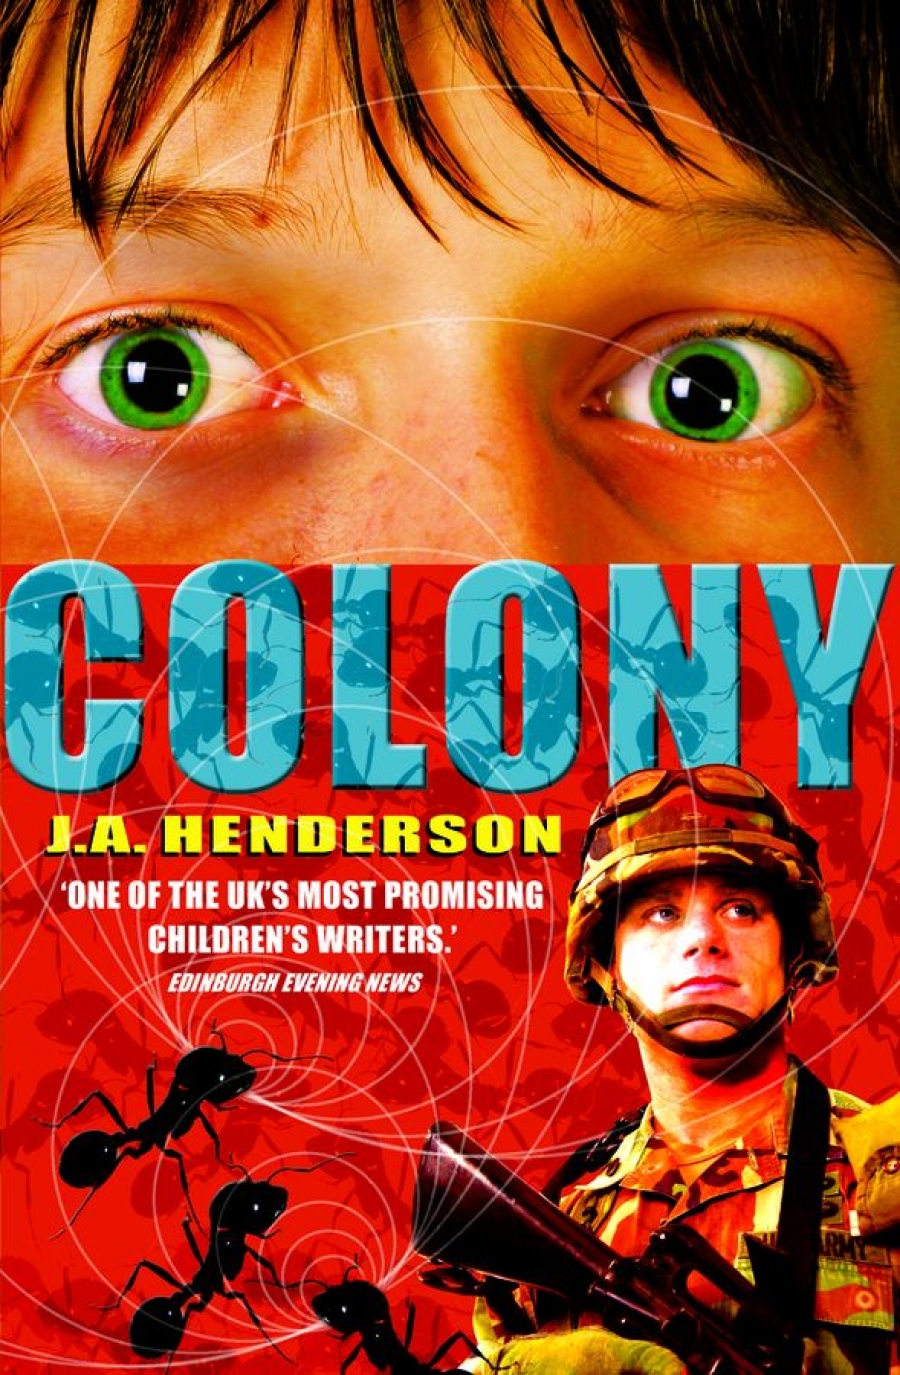 Henderson j,colony (2009) pb 